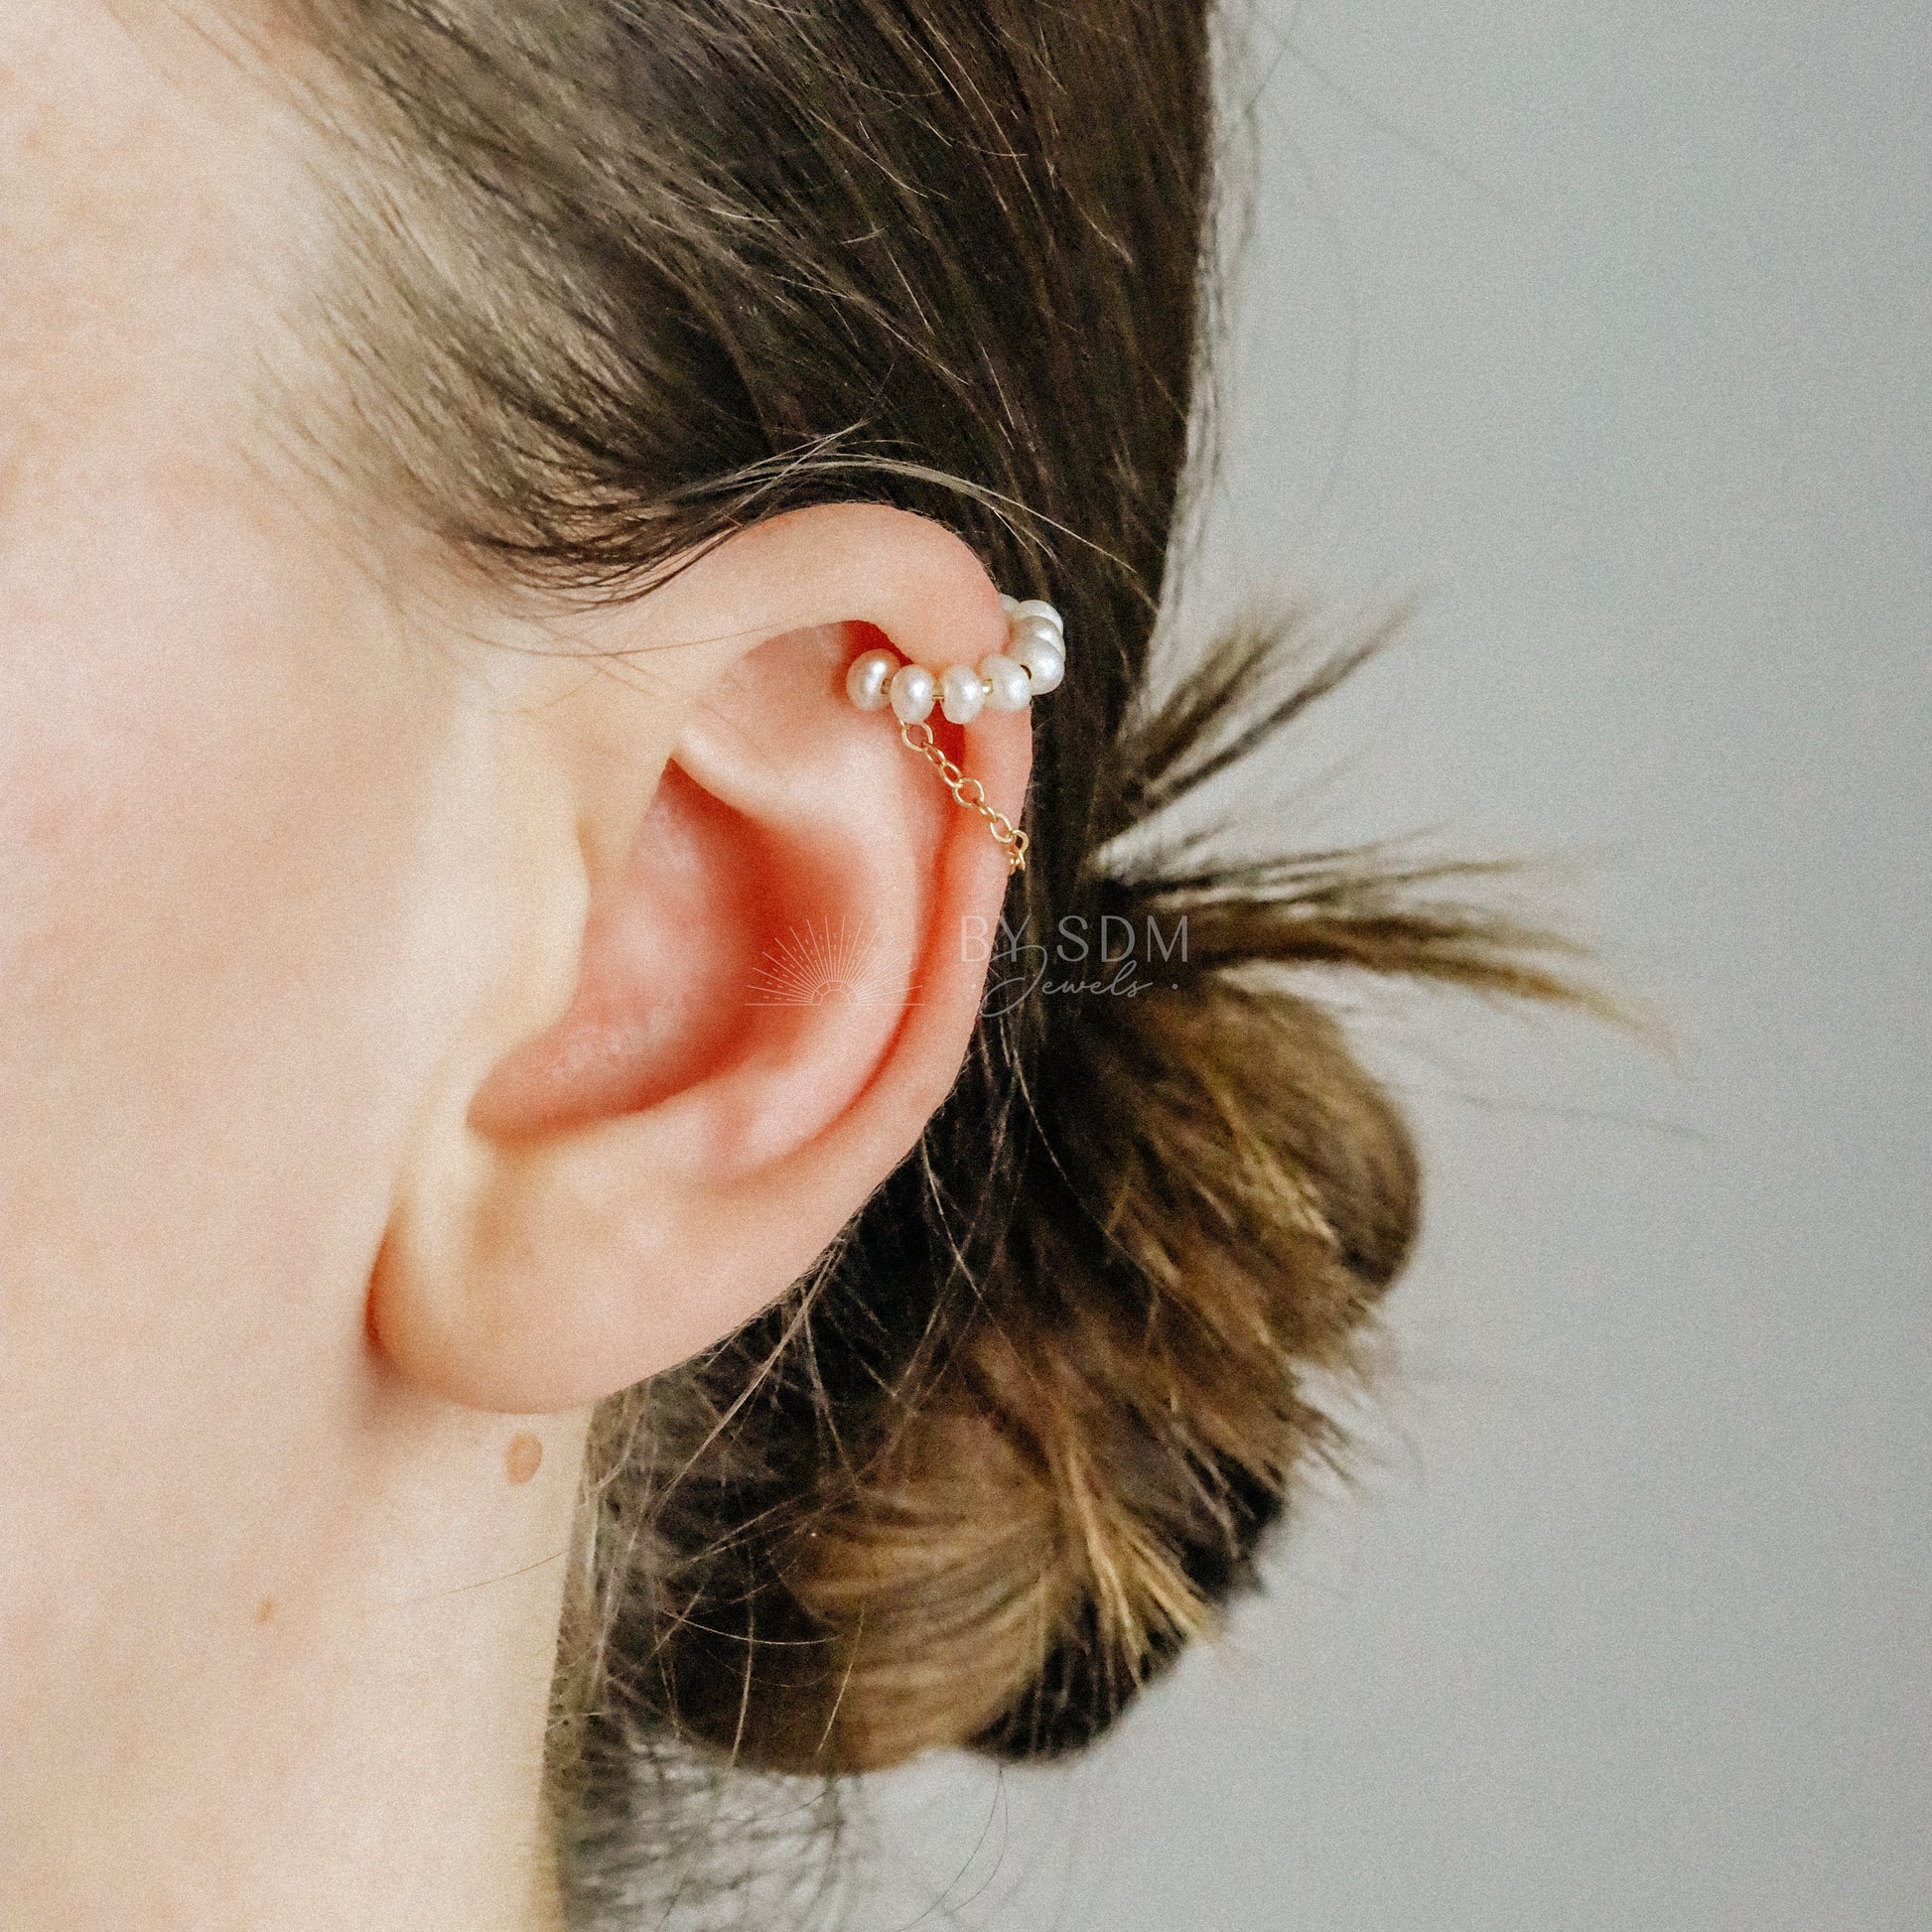 Natural Pearl Ear Cuff • 12k Gold Filled Ear Cuff • Pearl Cuff • Freshwater Ear Cuff • Gold Filled Cuff • No Piercing • BYSDMJEWELS